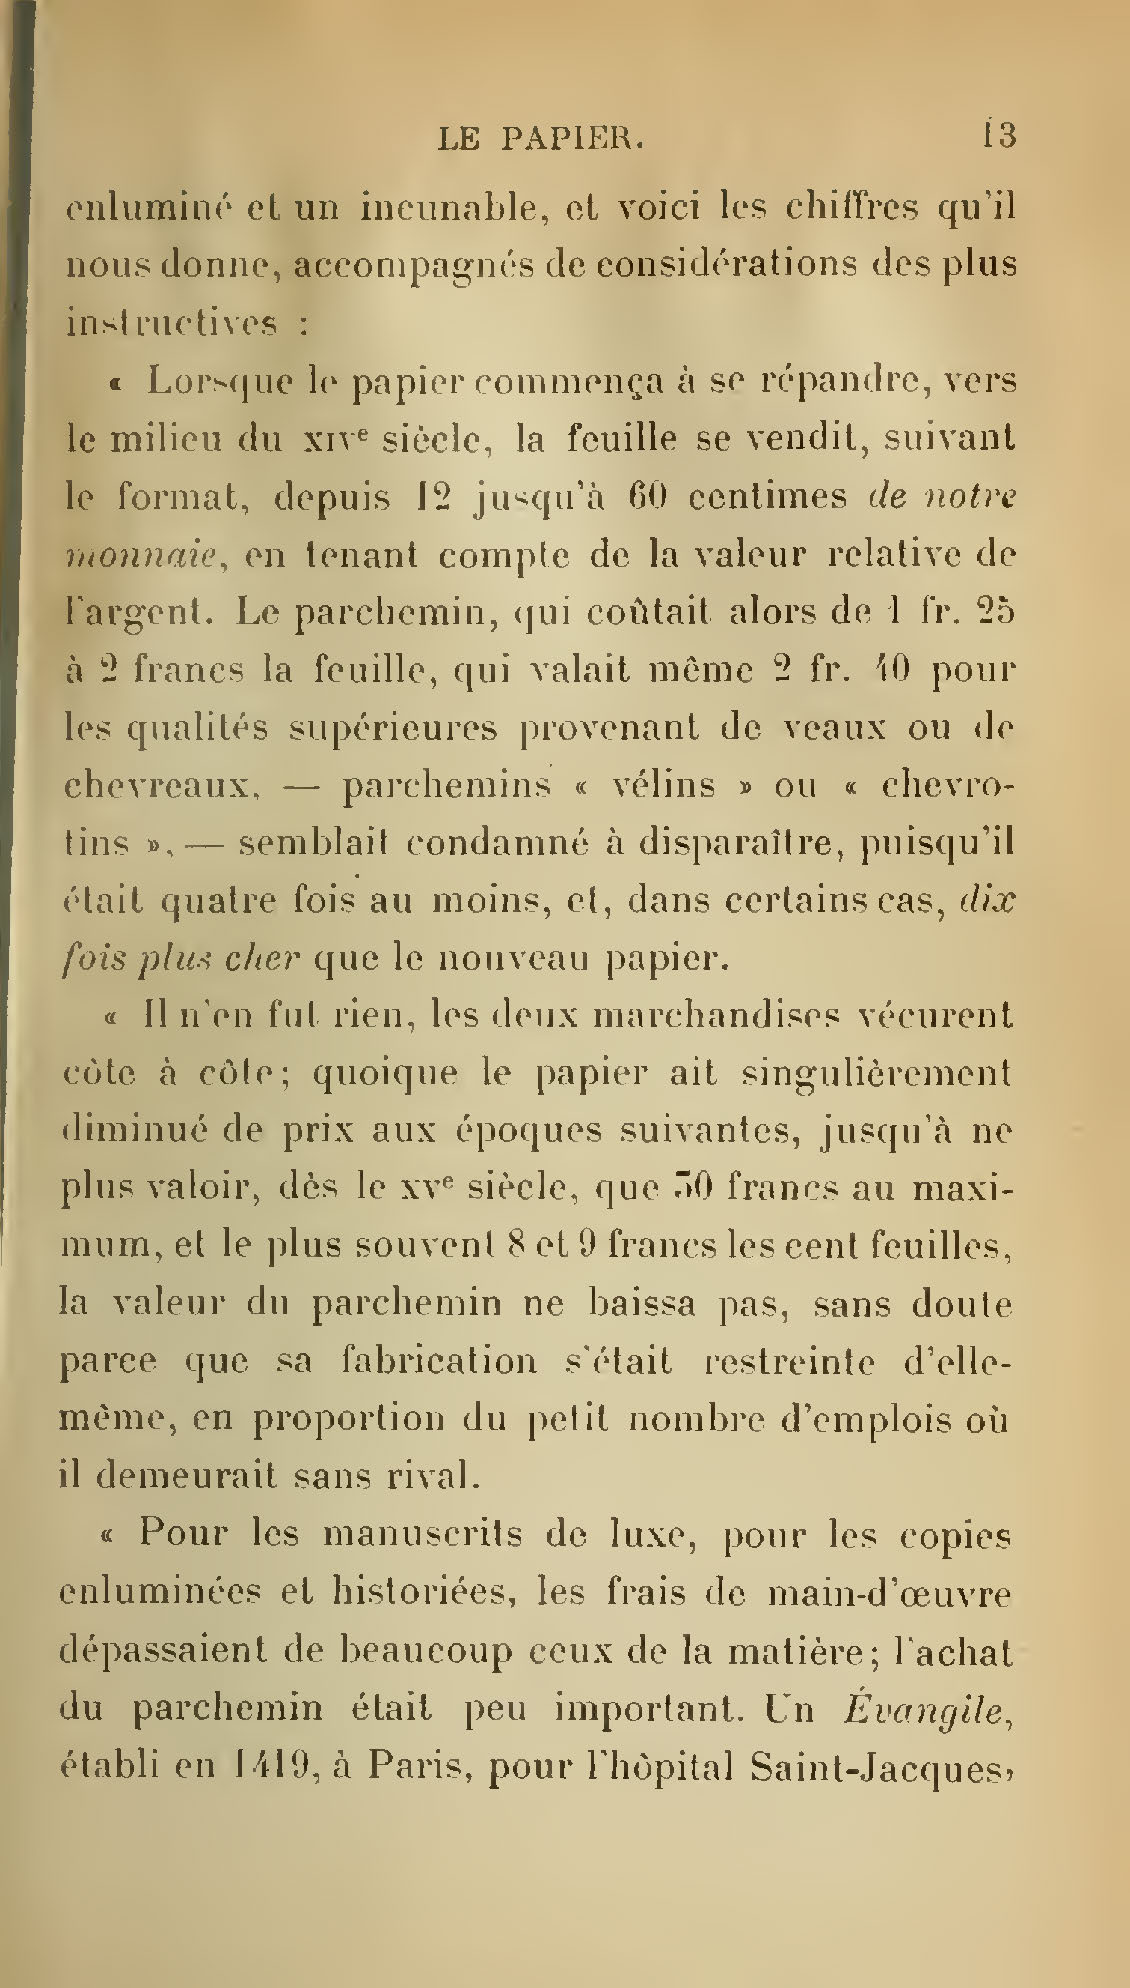 Albert Cim, Le Livre, t. III, p. 13.